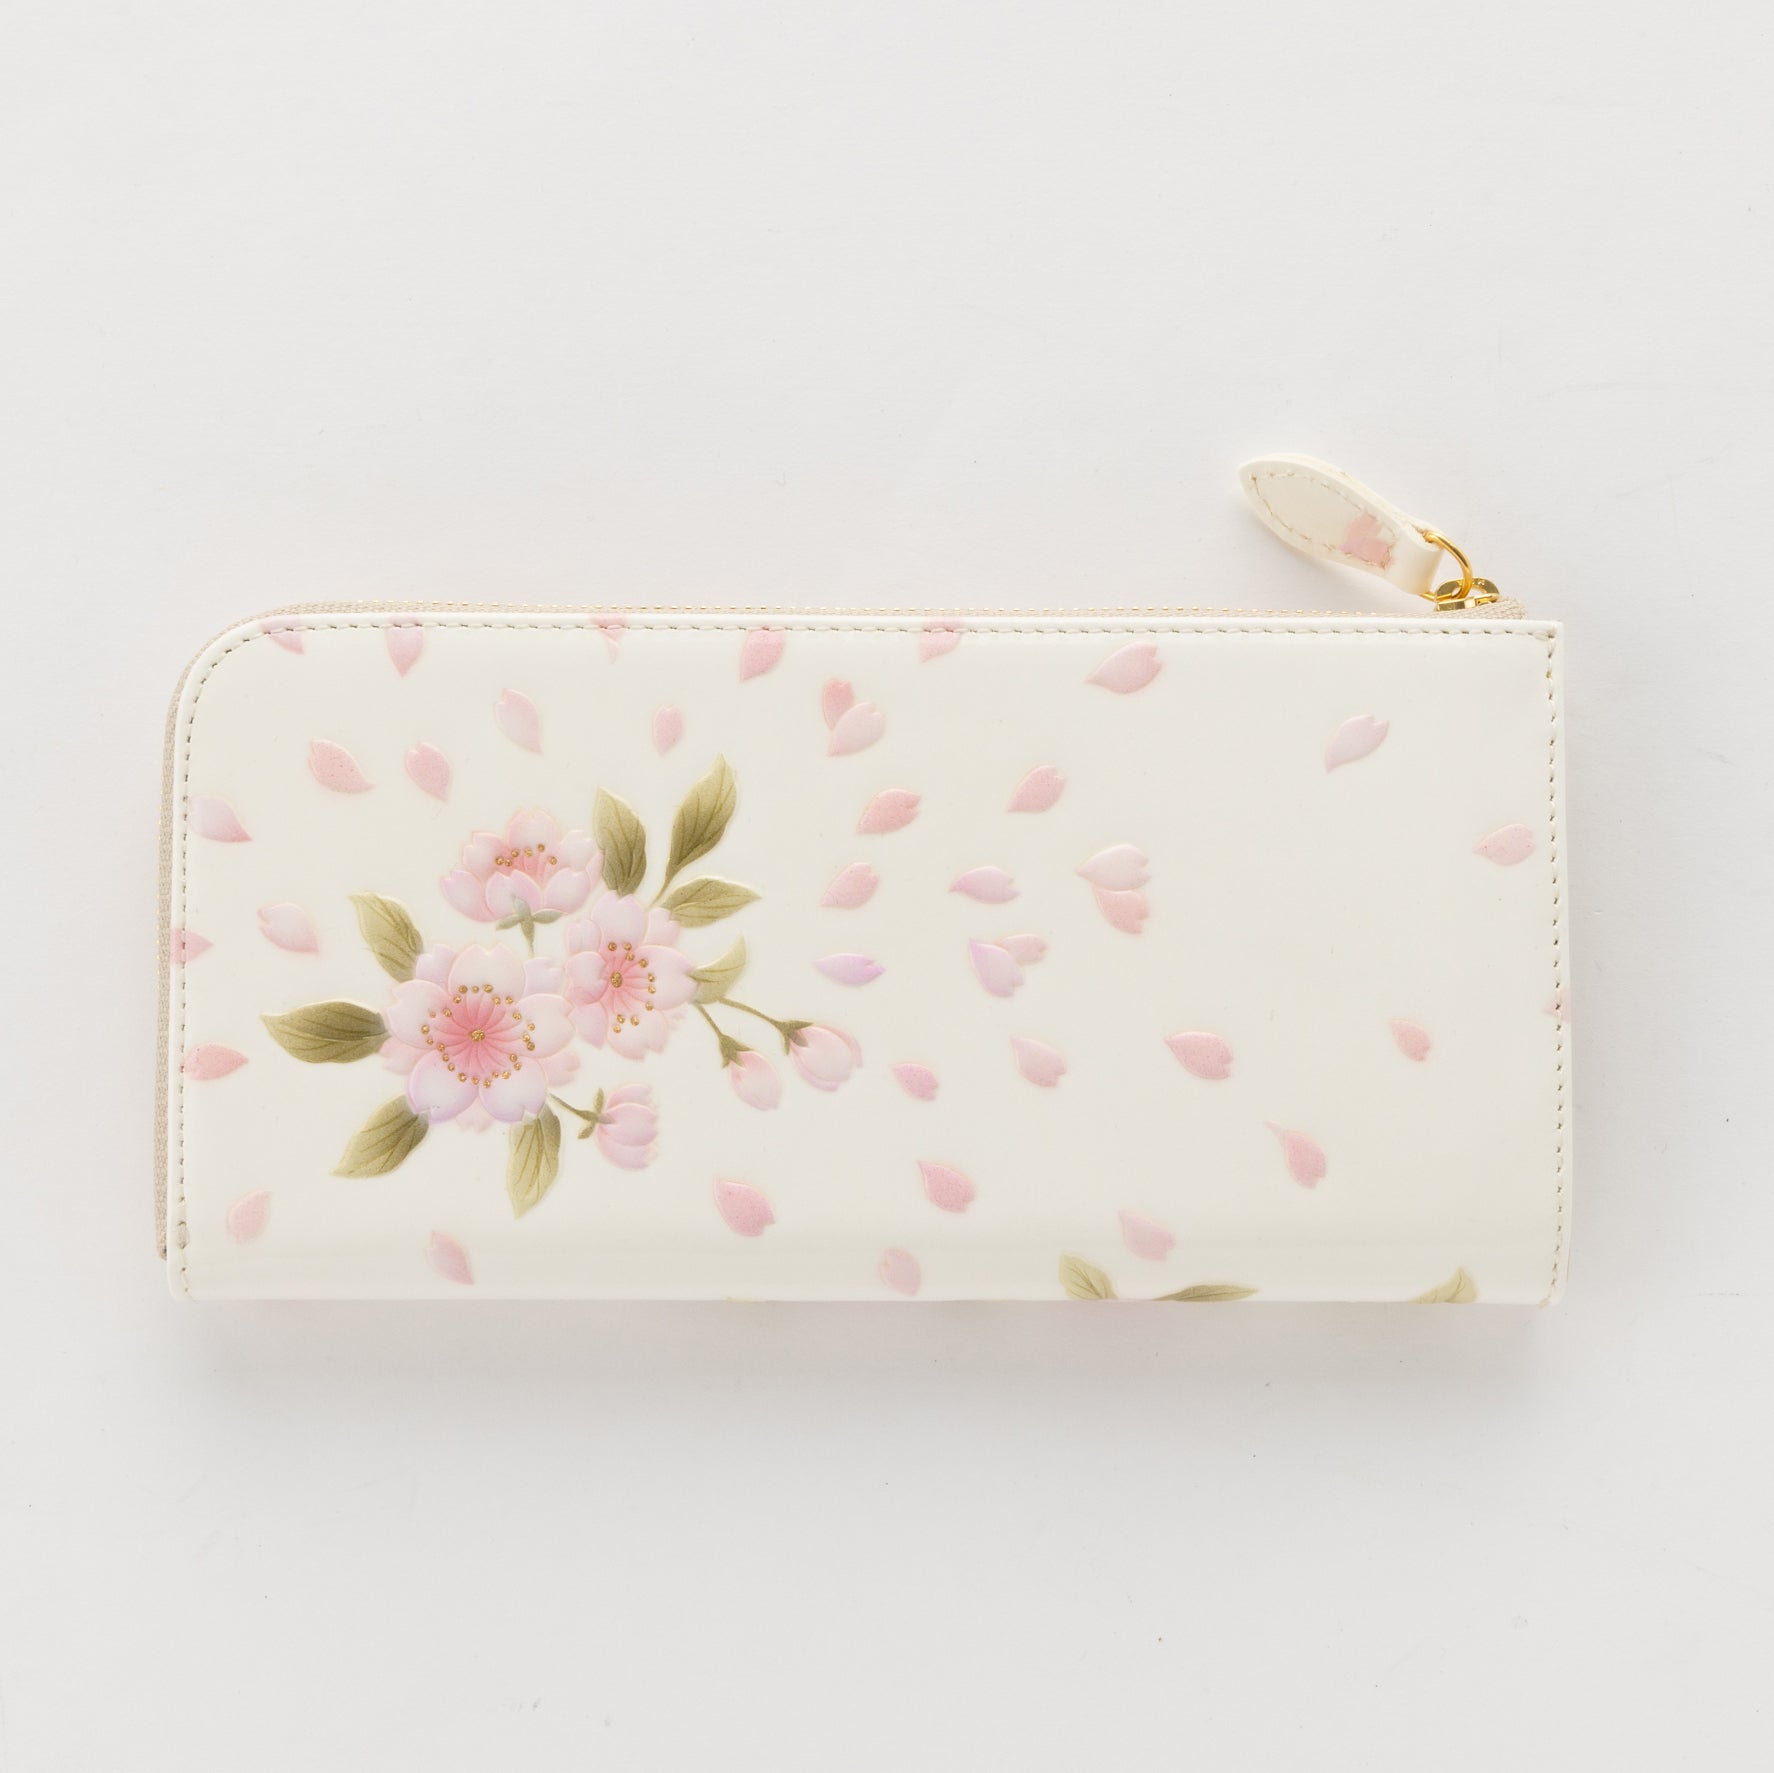 Full bloom Sakura pattern pressed flower leather long wallet - Shop TOUKA  Wallets - Pinkoi